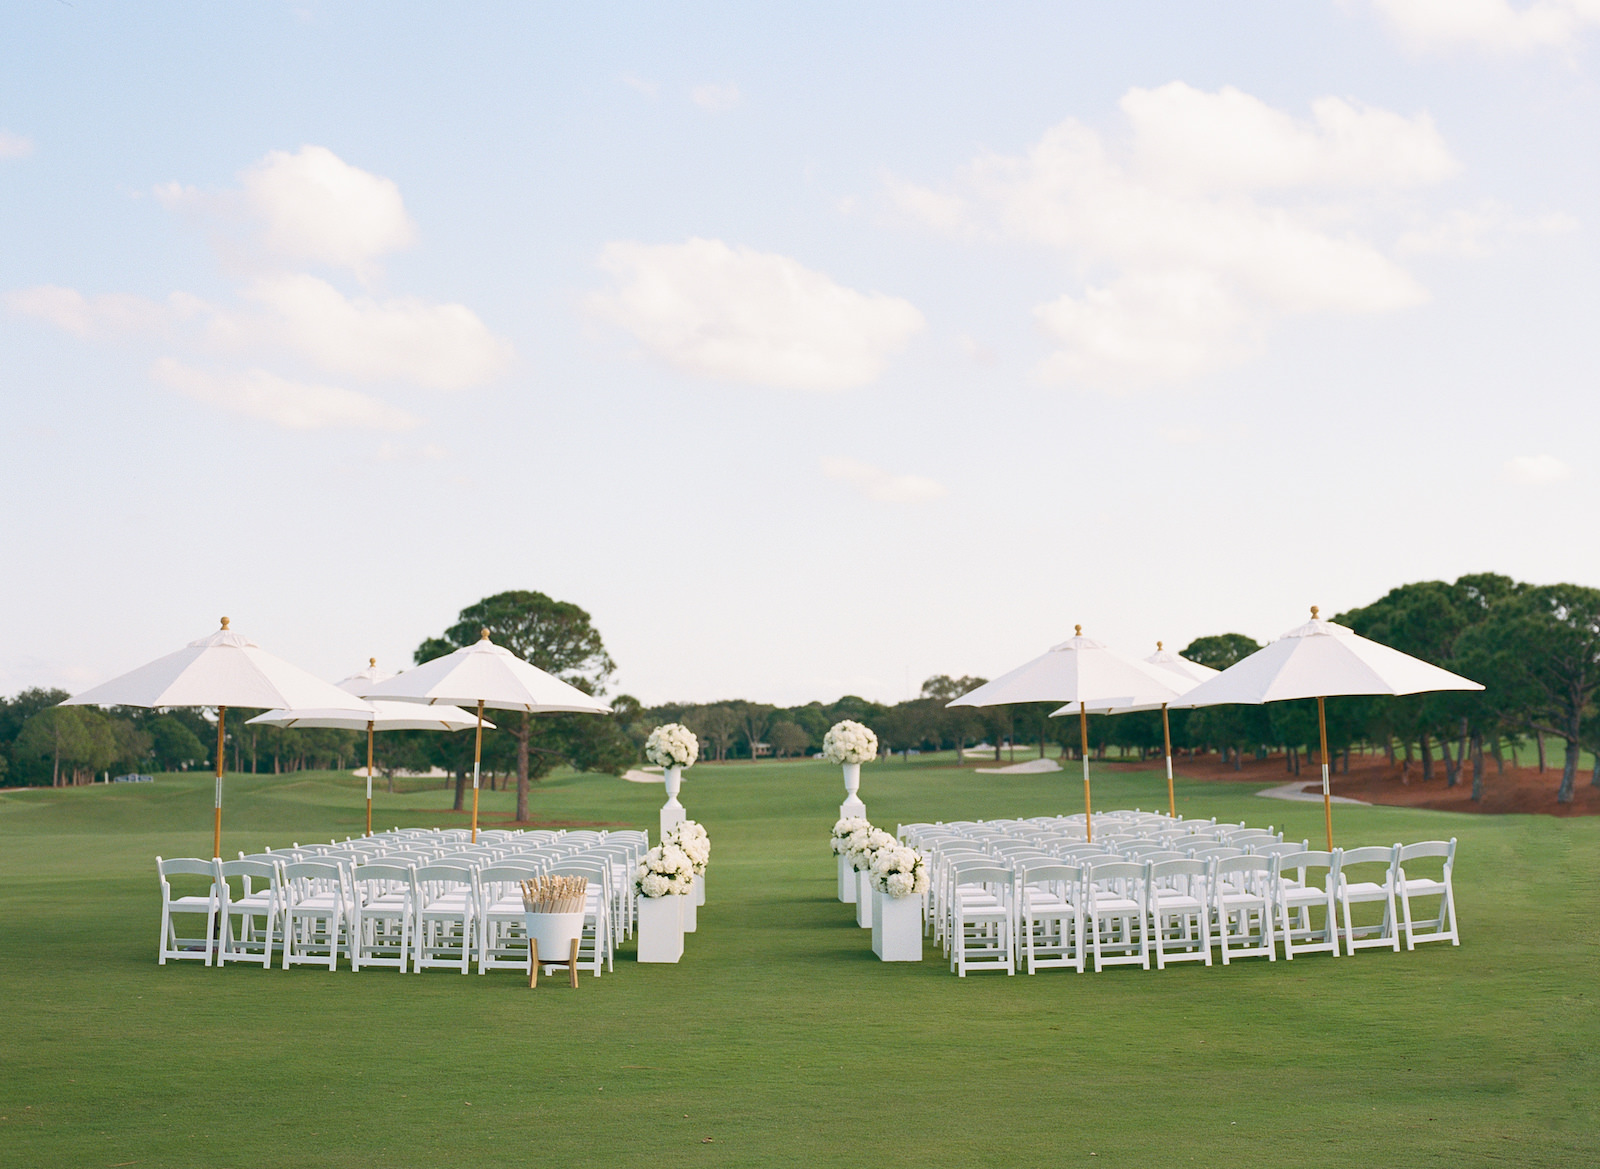 Luxurious Formal Outdoor All White Wedding Ceremony Decor on Golf Course, White Umbrellas | Tampa Bay Wedding Venue Pelican Golf Club | Wedding Planner Parties A'la Carte | Wedding Rentals Gabro Event Services